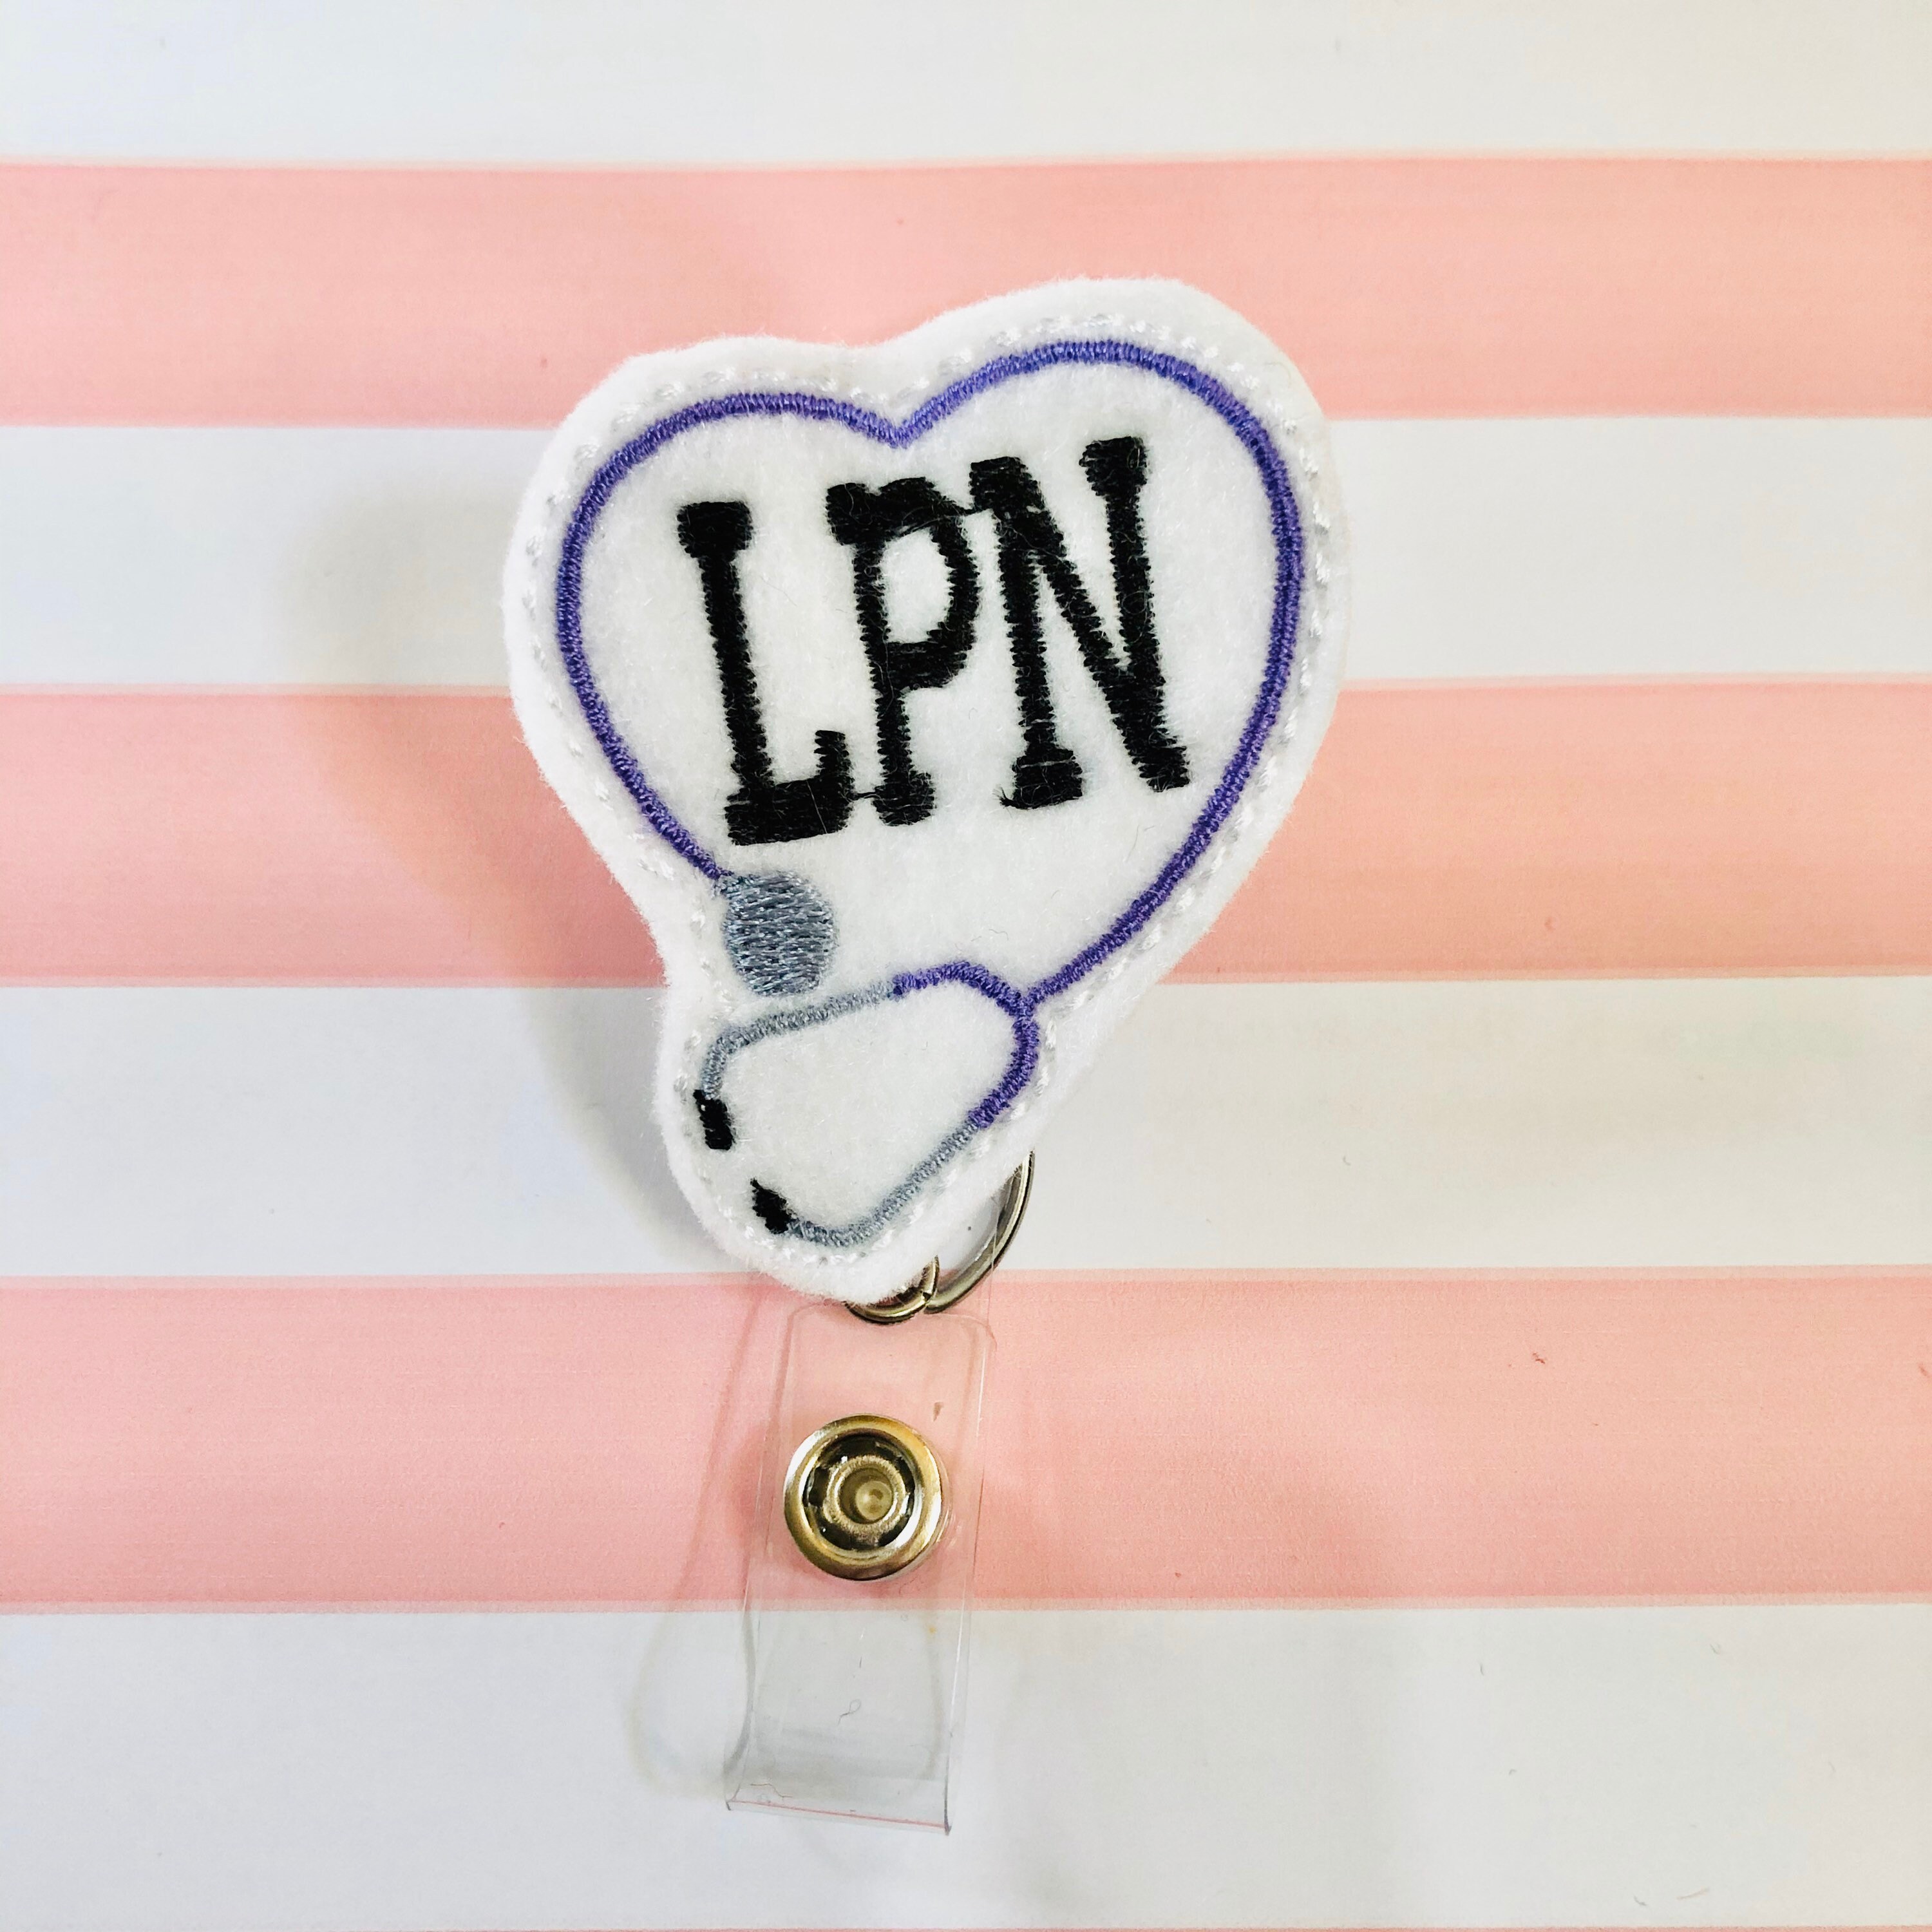 Licensed practical nurse LPN themed badge reel holder buddy | Etsy